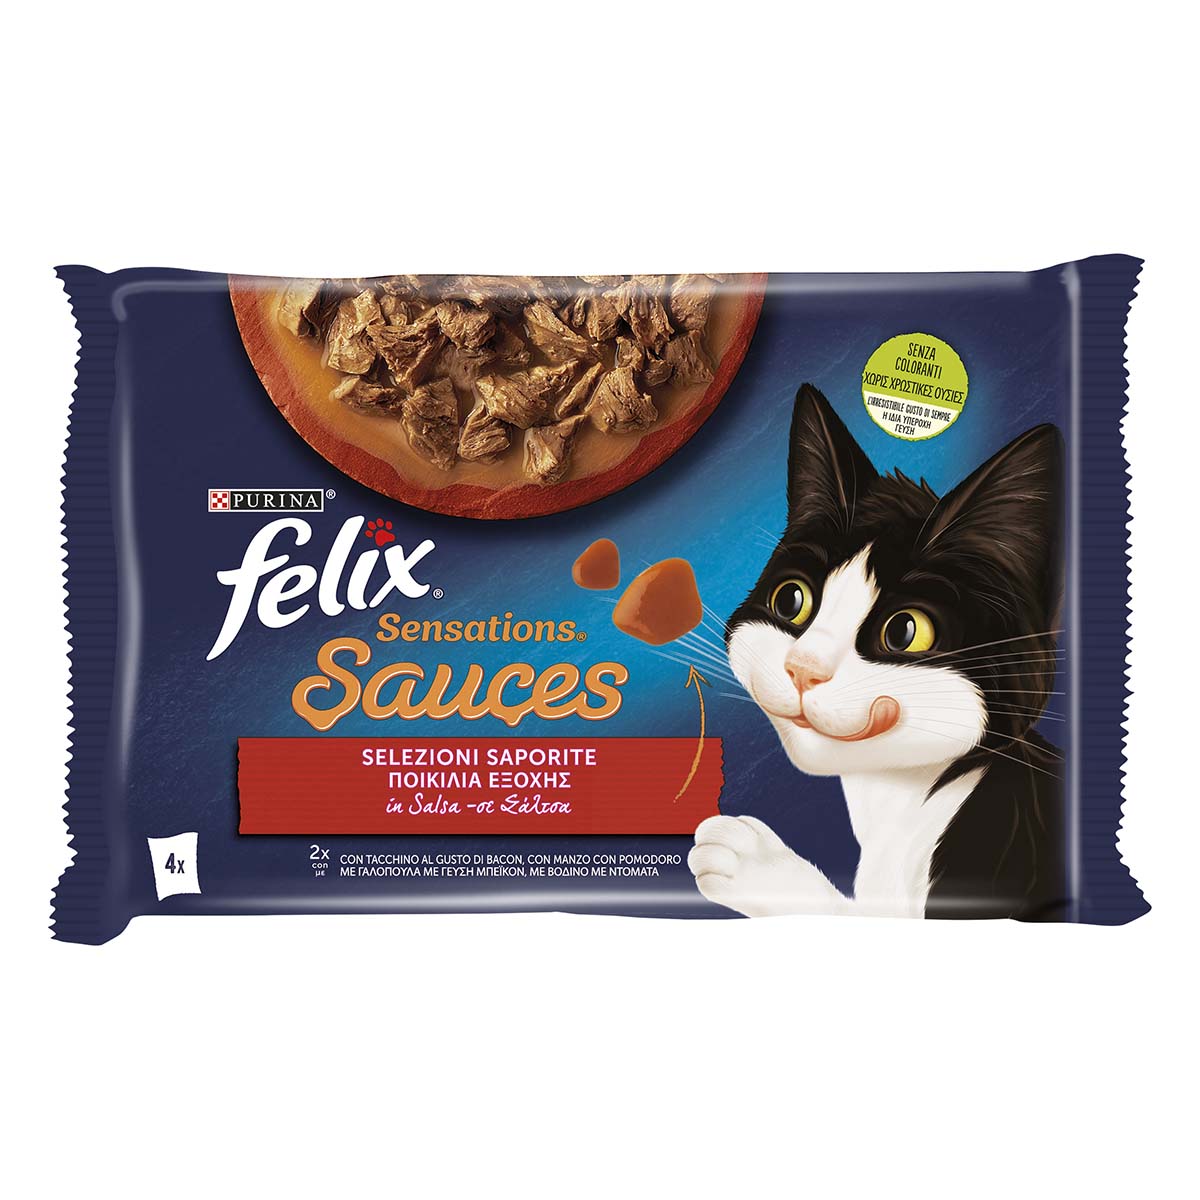 Felix Sensation Sauces Selezioni Saporite